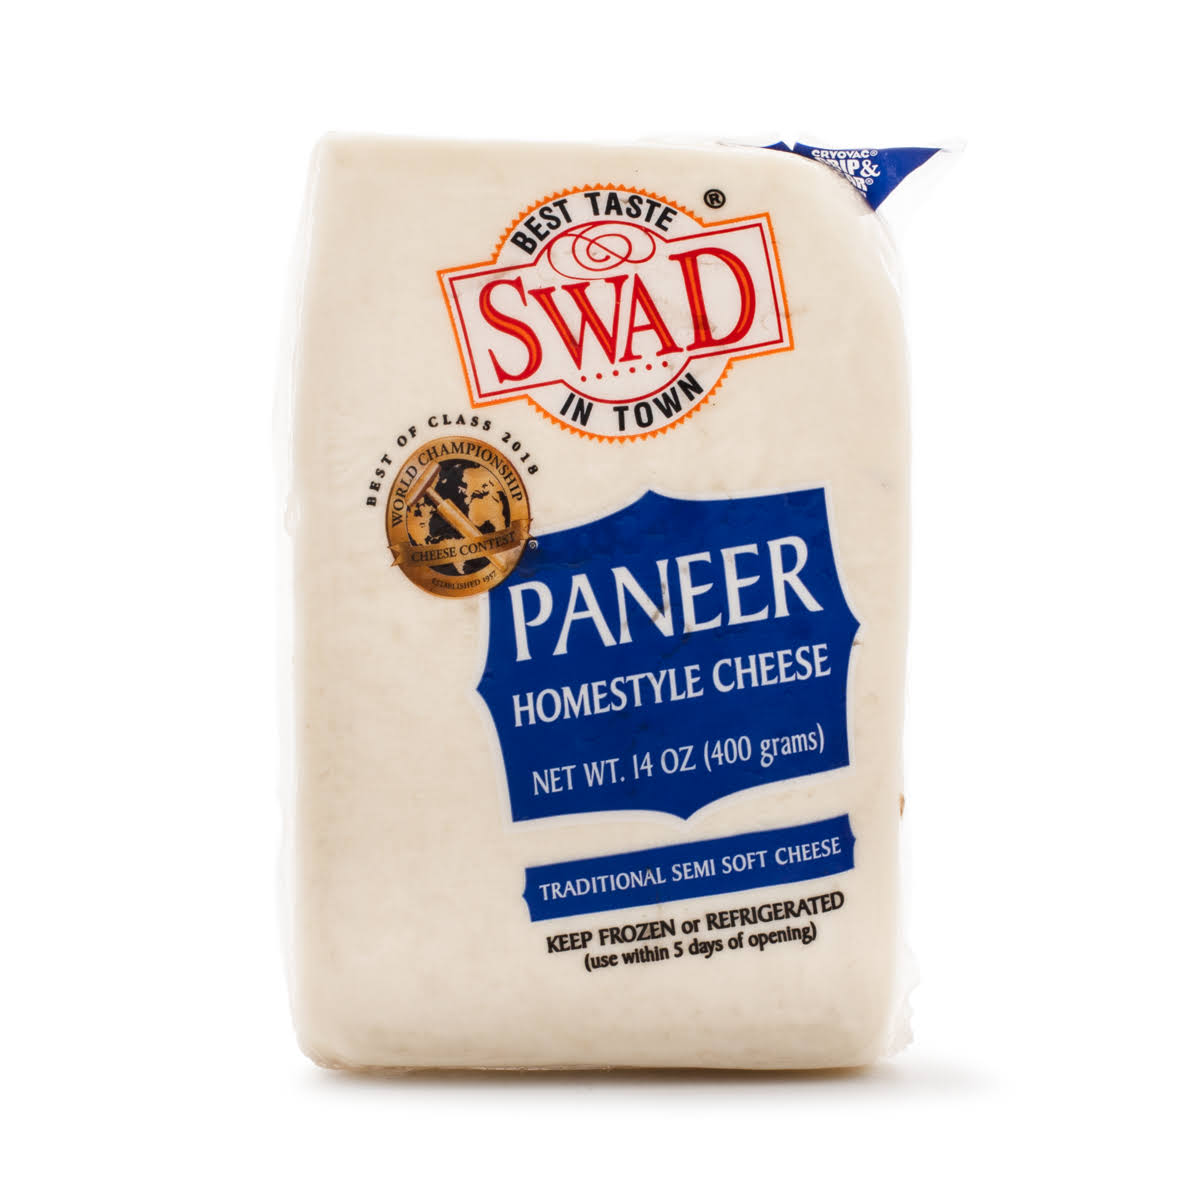 Swad Paneer Homestyle Cheese